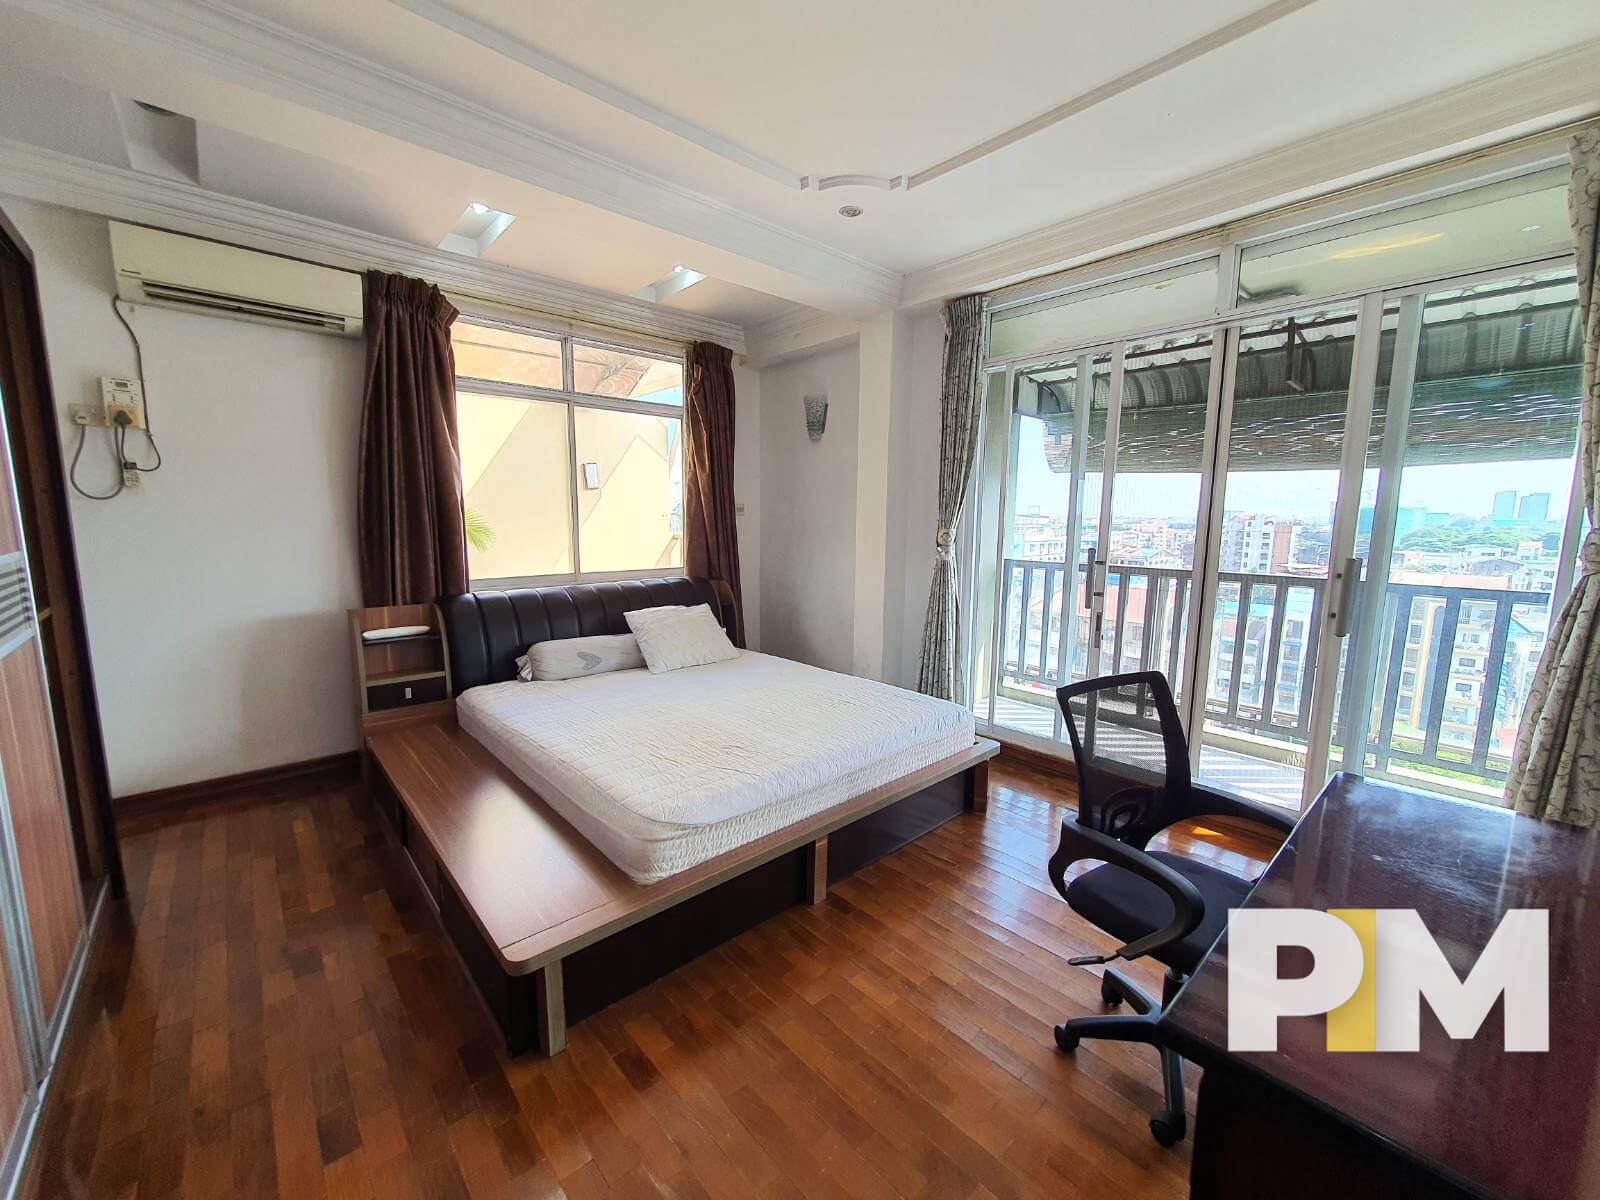 Bedroom with balcony - Myanmar Real Estate